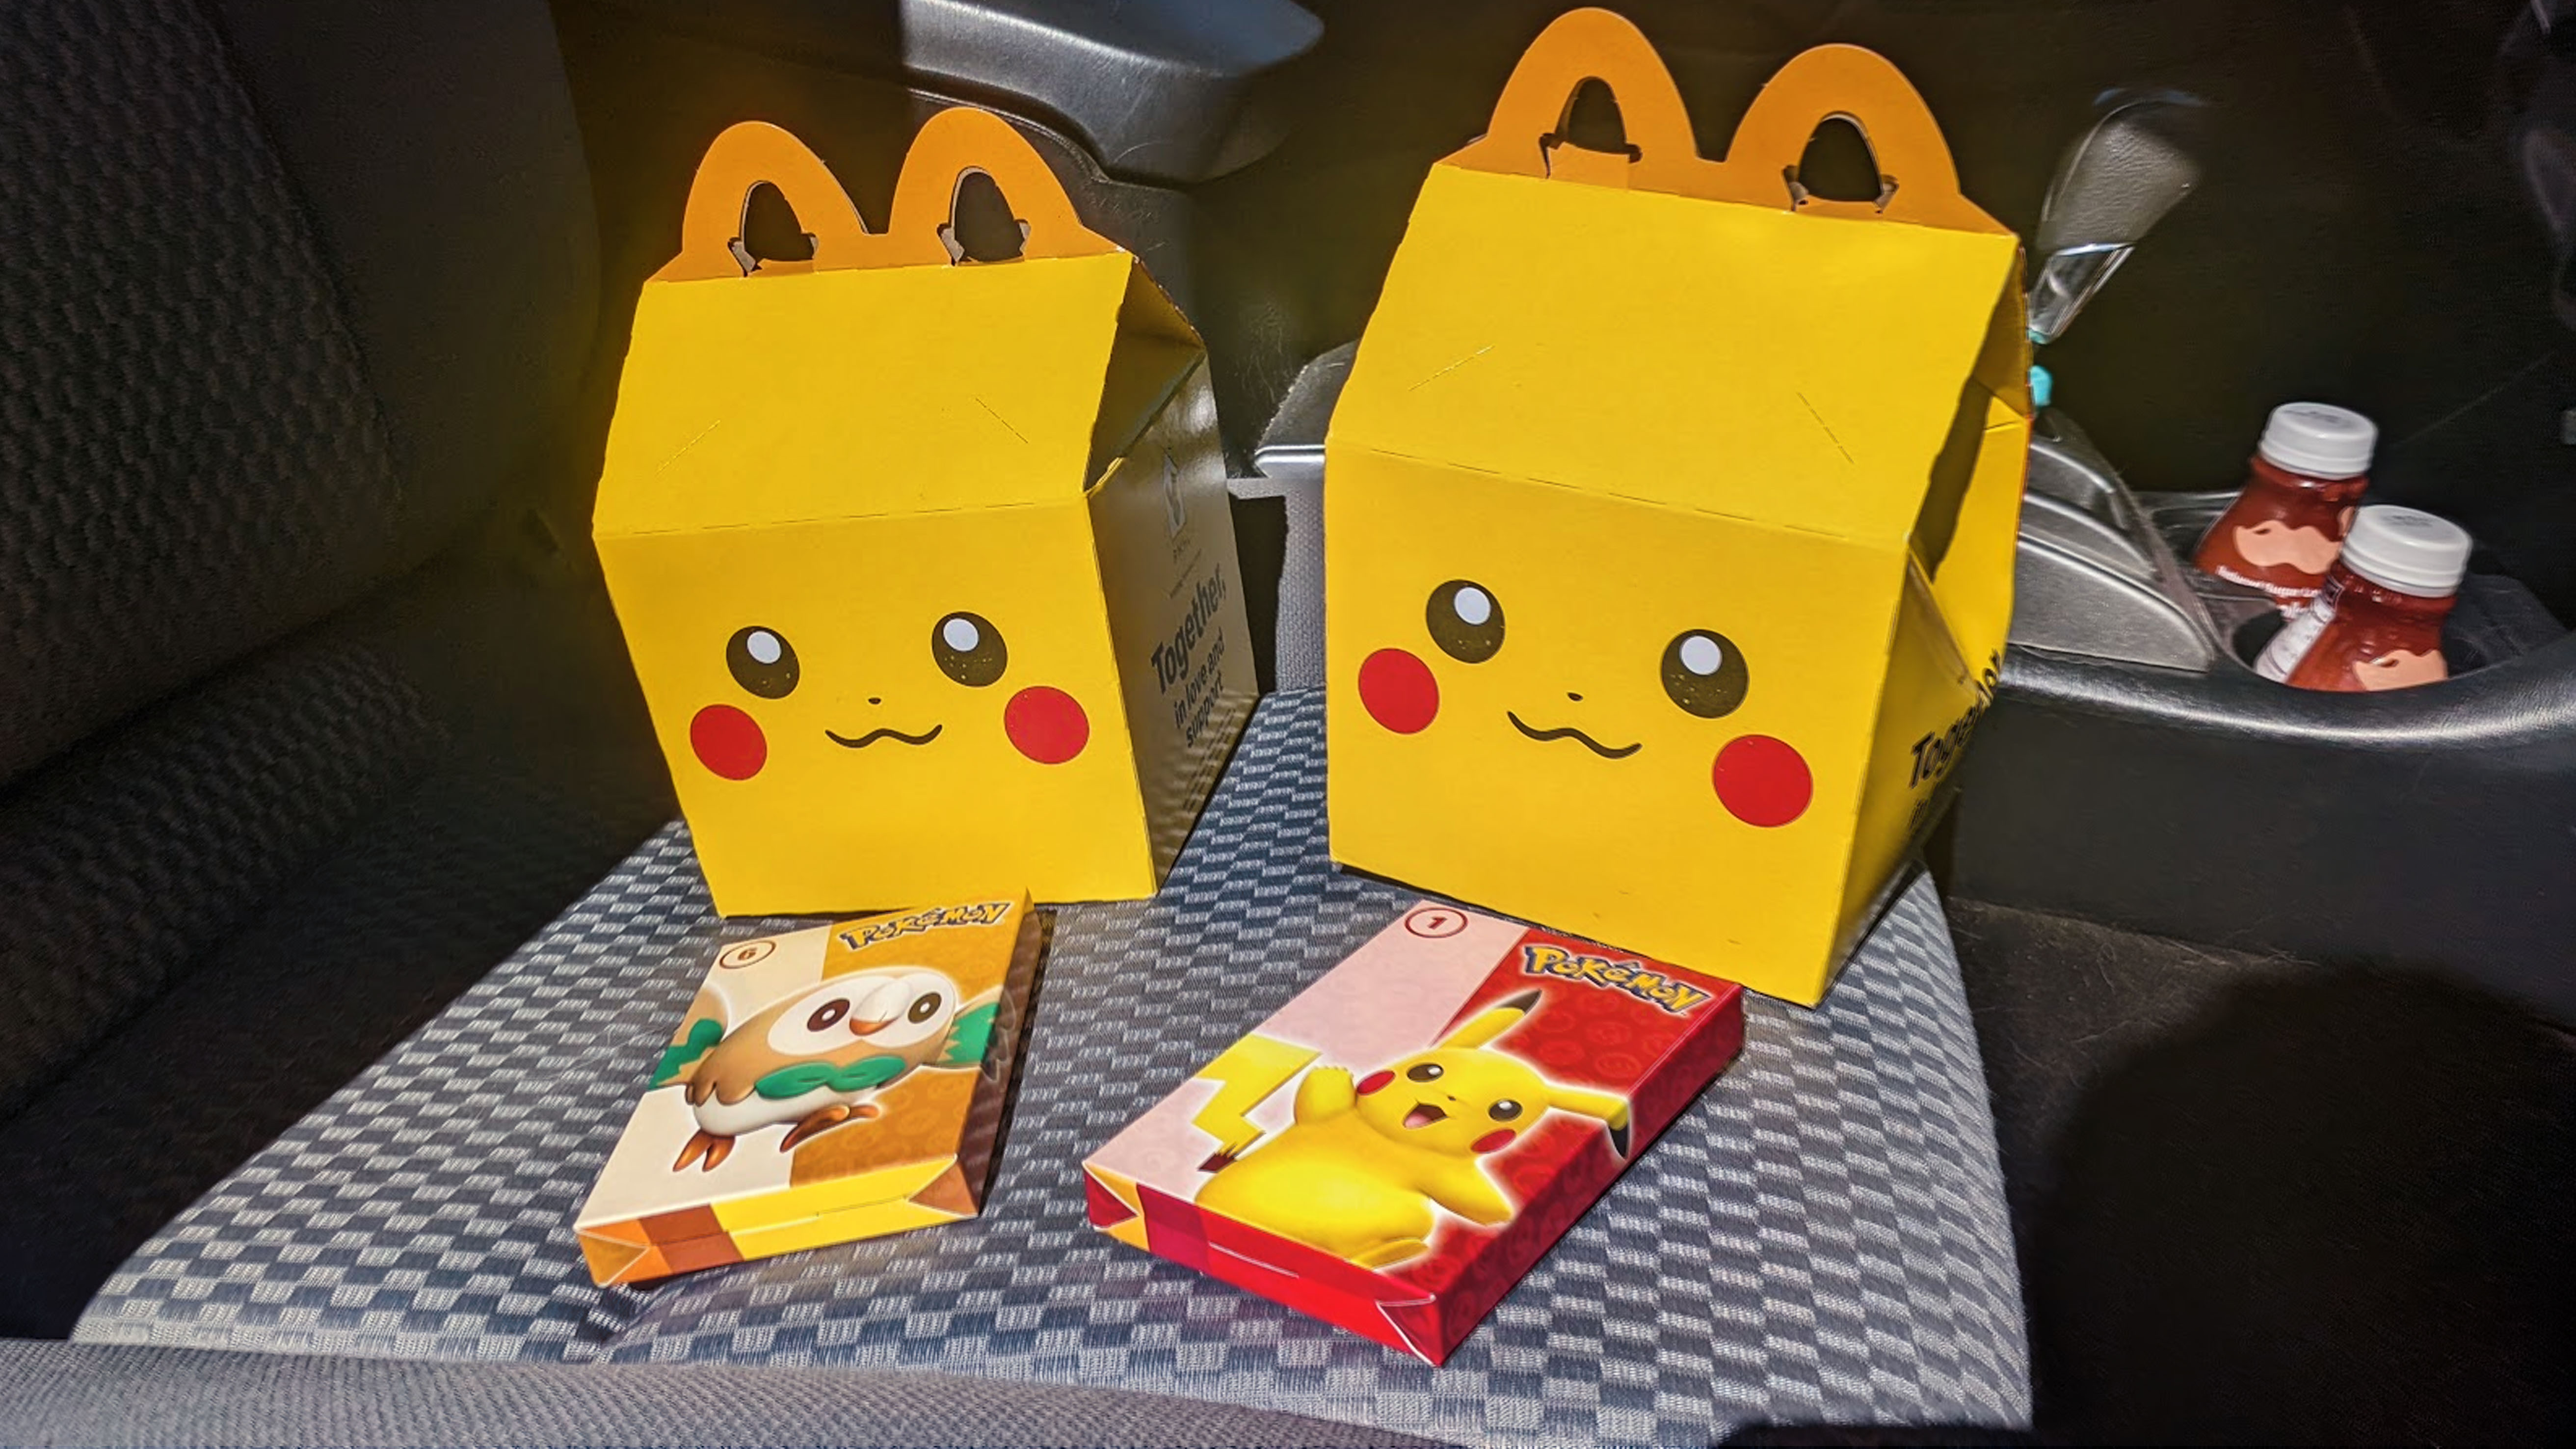 Hazy image of McDonalds Happy Meals